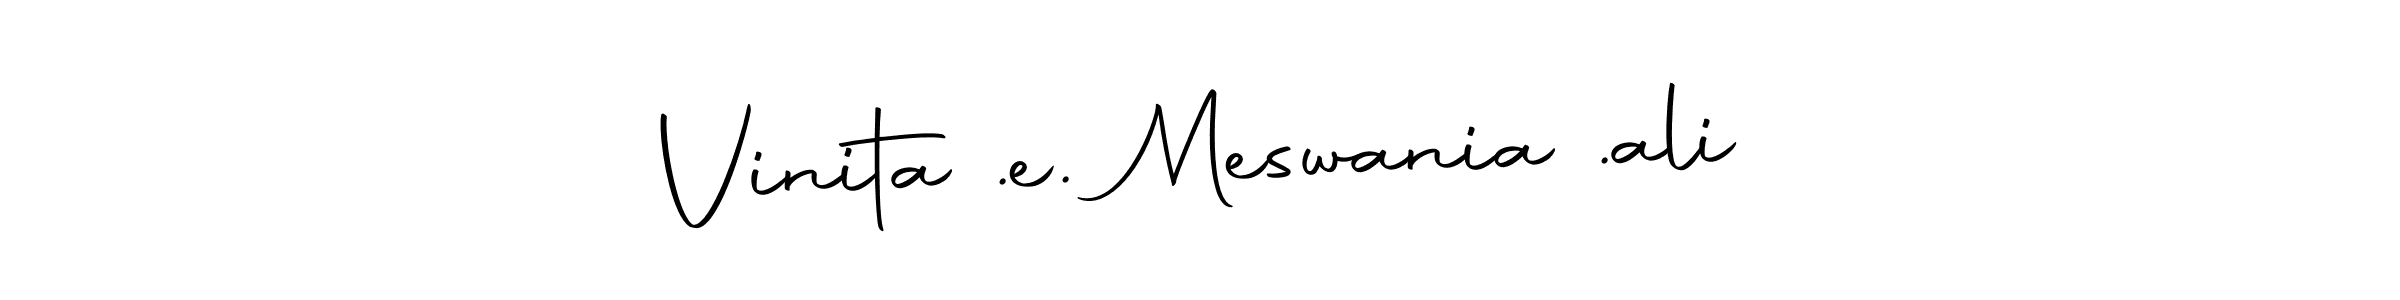 It looks lik you need a new signature style for name Vinita .e. Meswania .ali. Design unique handwritten (Autography-DOLnW) signature with our free signature maker in just a few clicks. Vinita .e. Meswania .ali signature style 10 images and pictures png